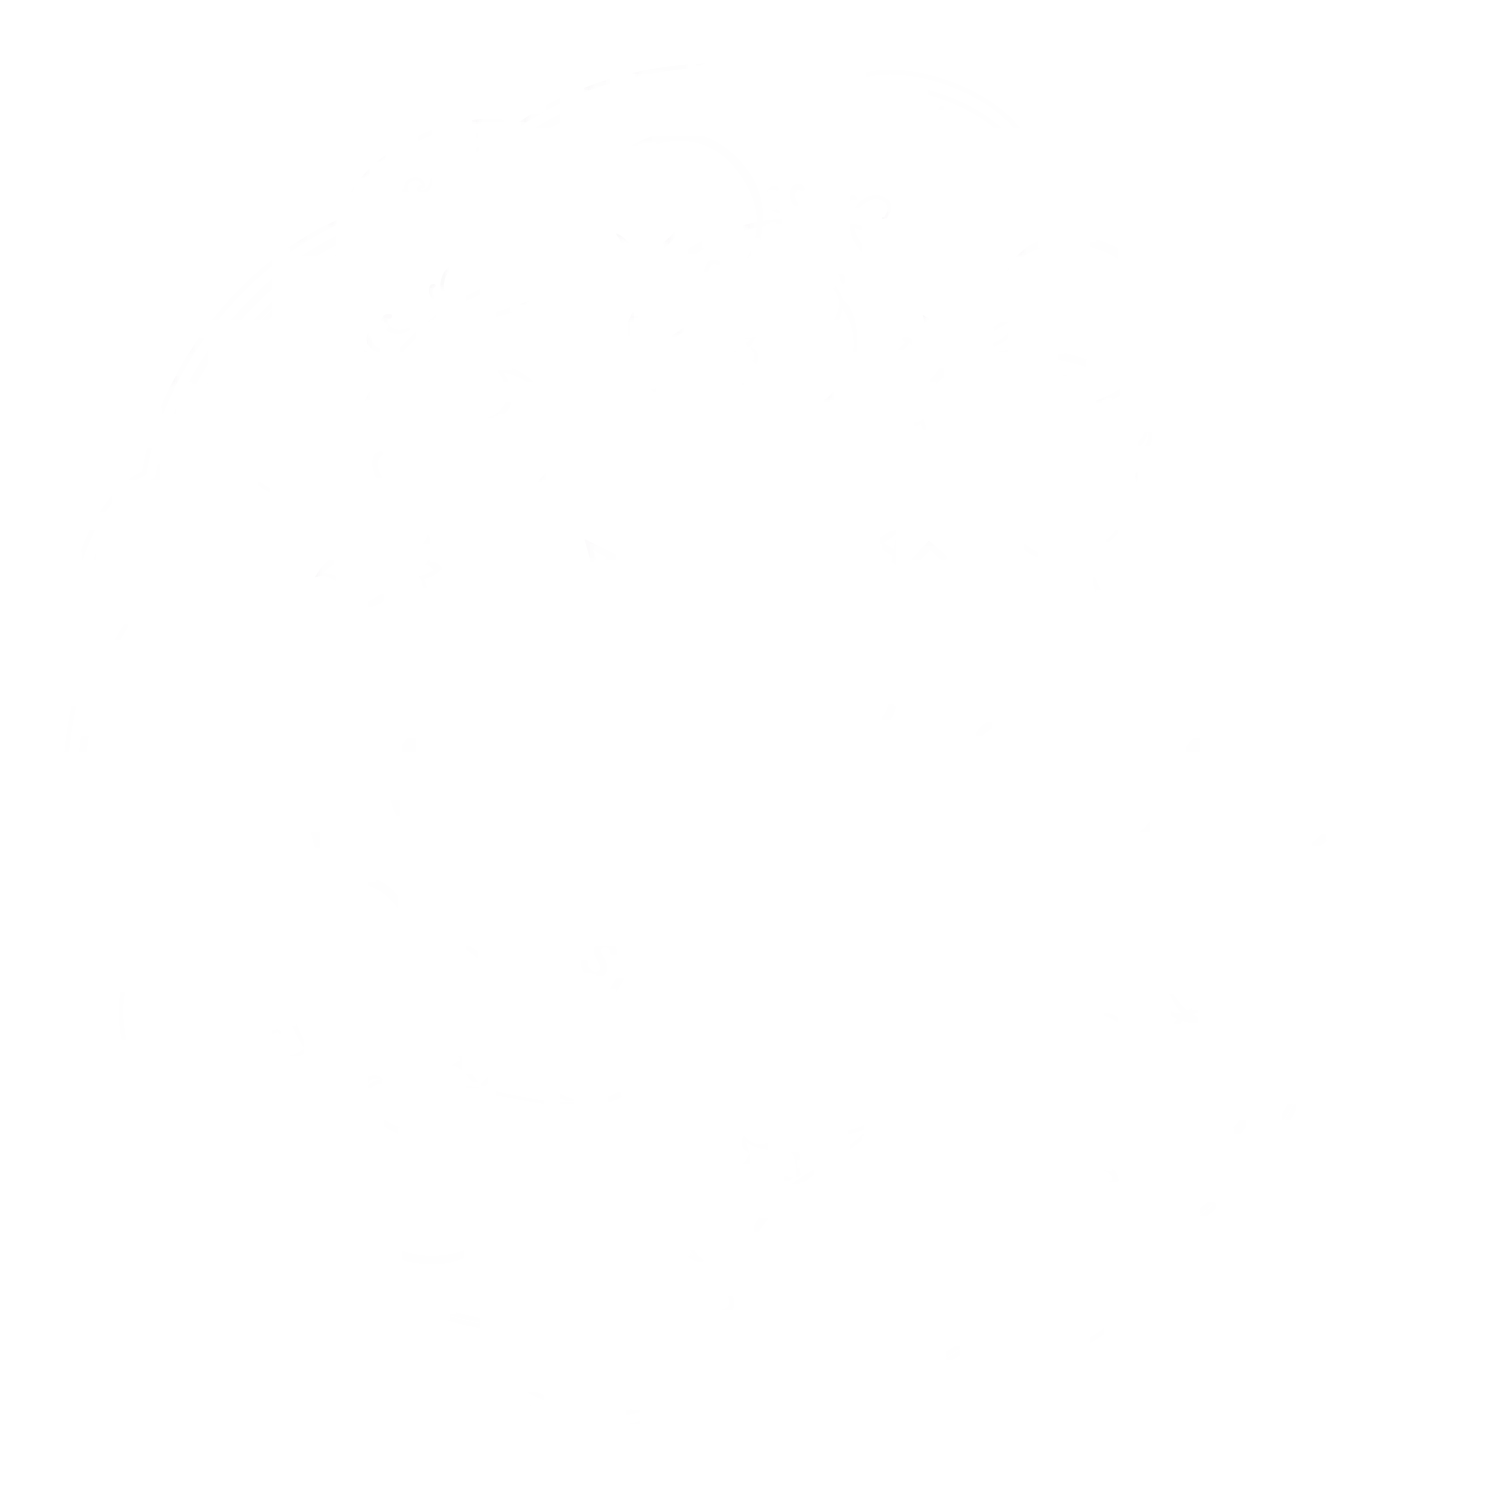 Well-Bred Bakery & Cafe Grove Arcade